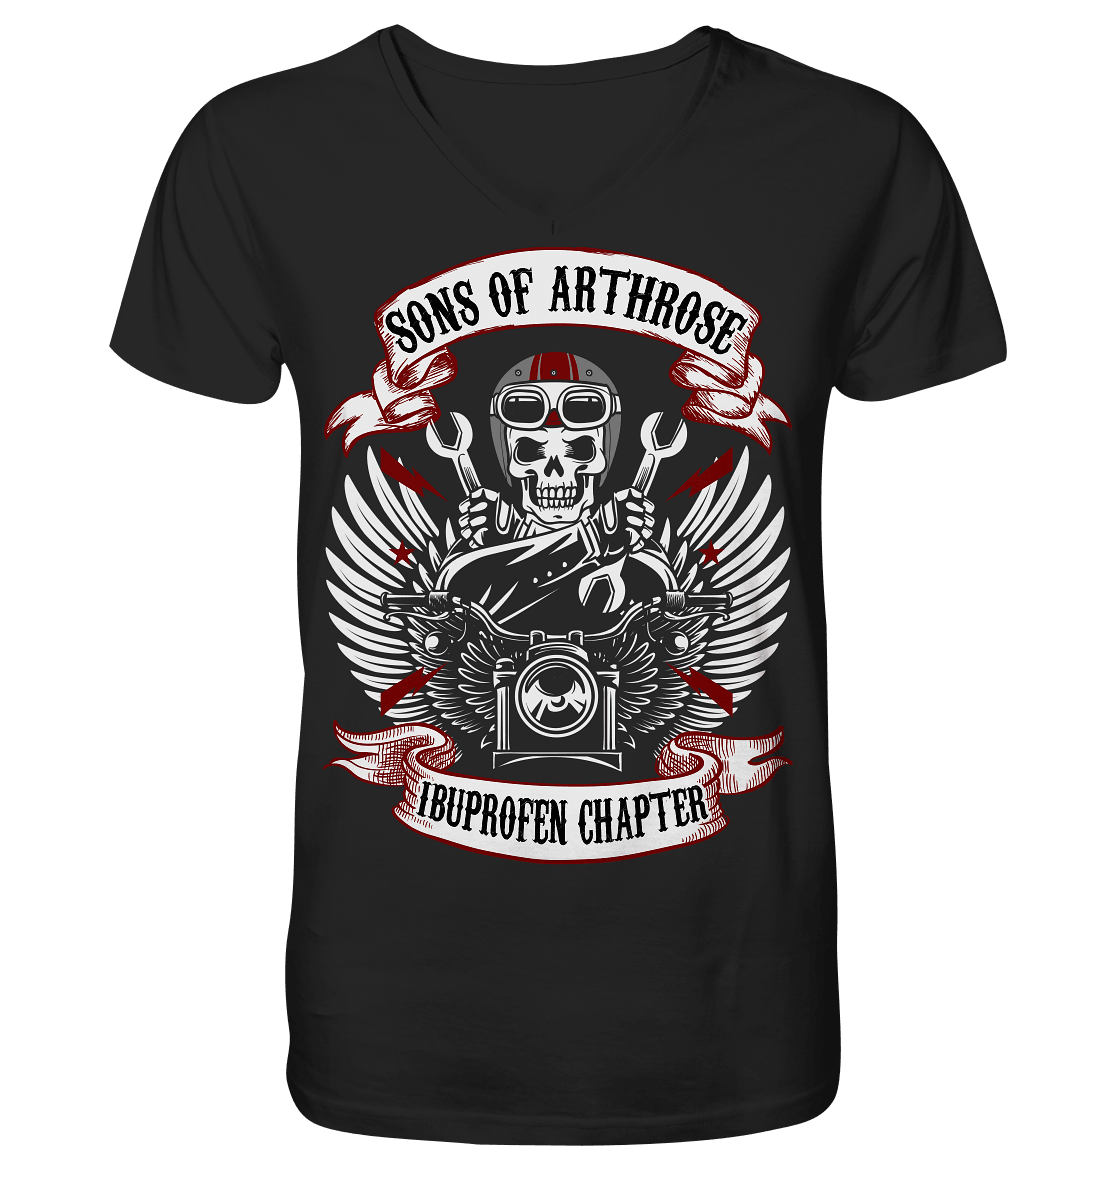 Sons of Arthrose - Men's V-Neck Shirt - Totally Wasted